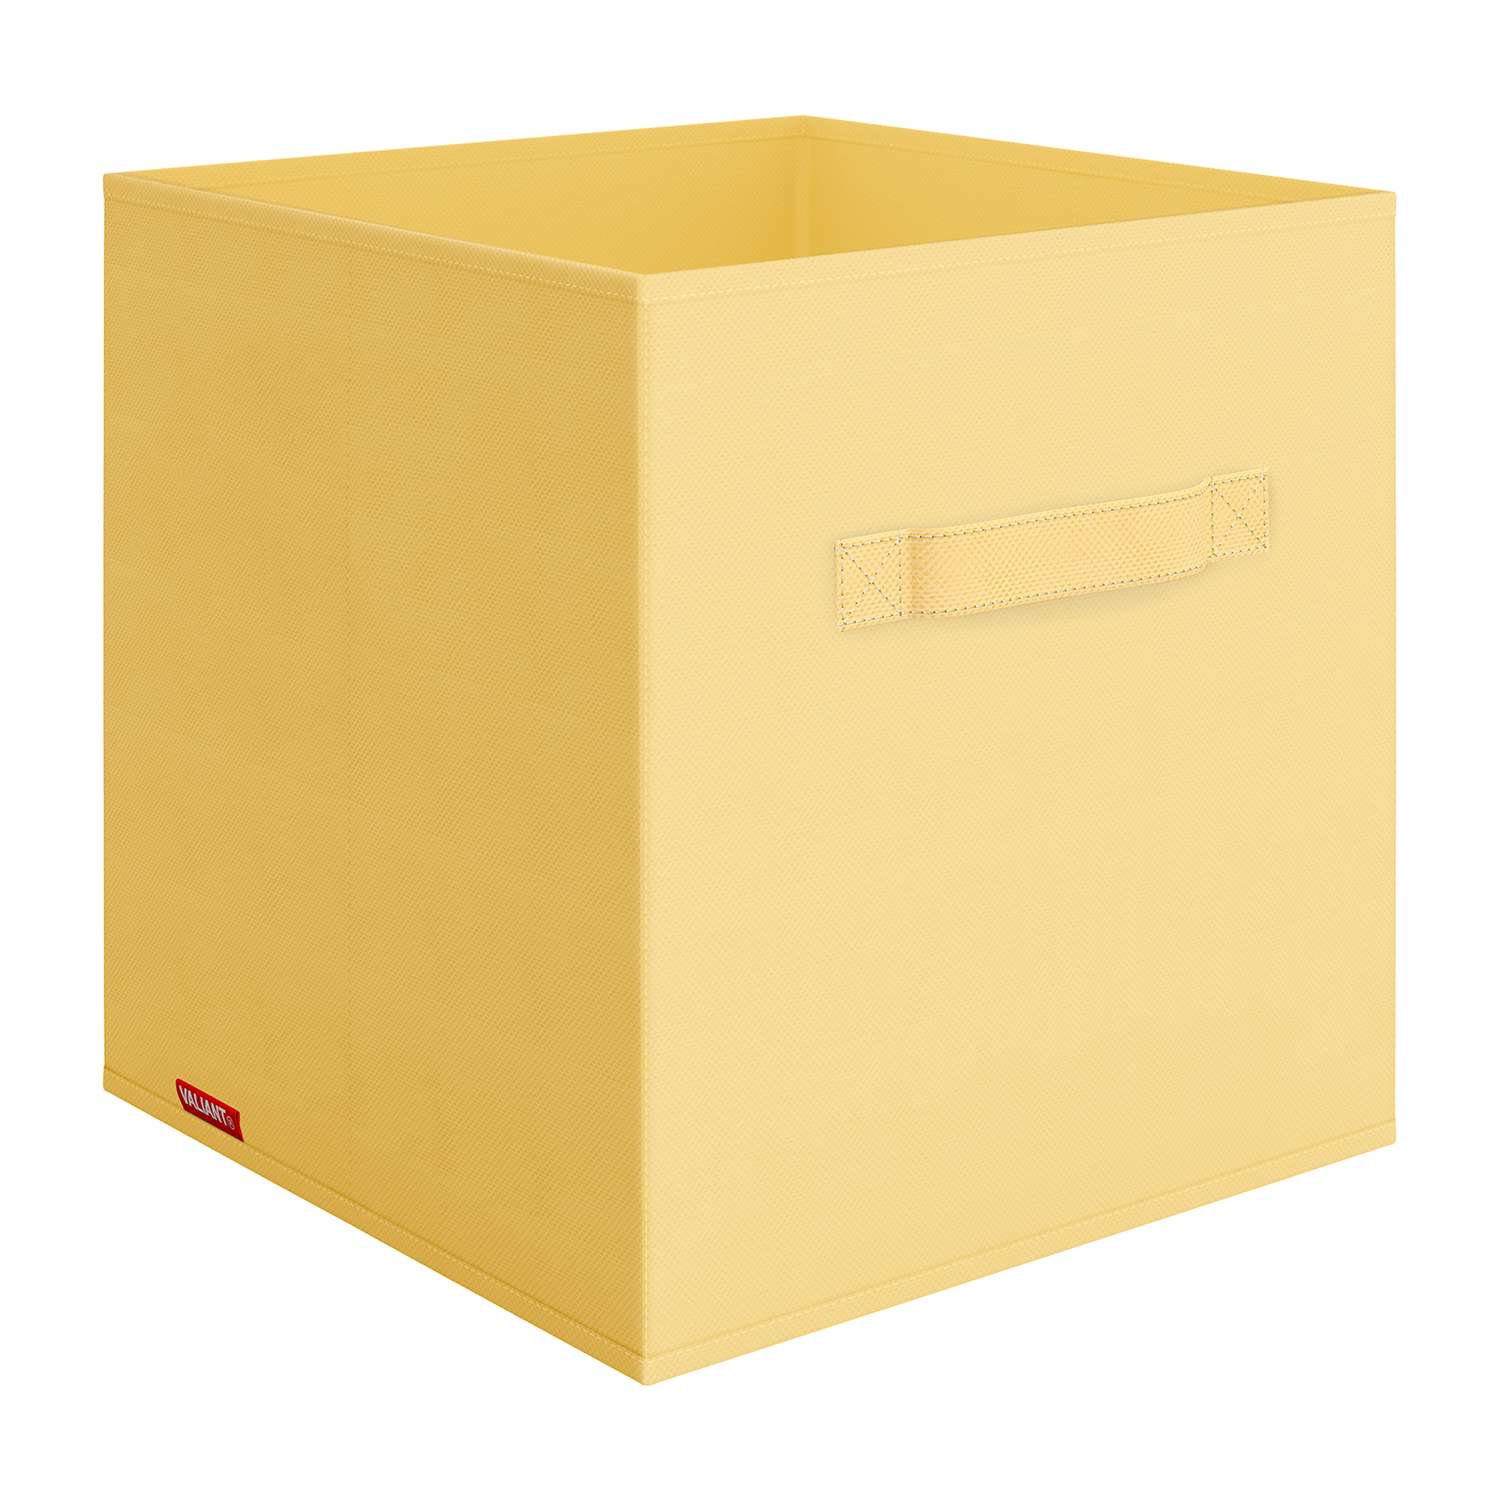 Коробка для хранения VALIANT набор 3 шт. 28*28*28 см - фото 4